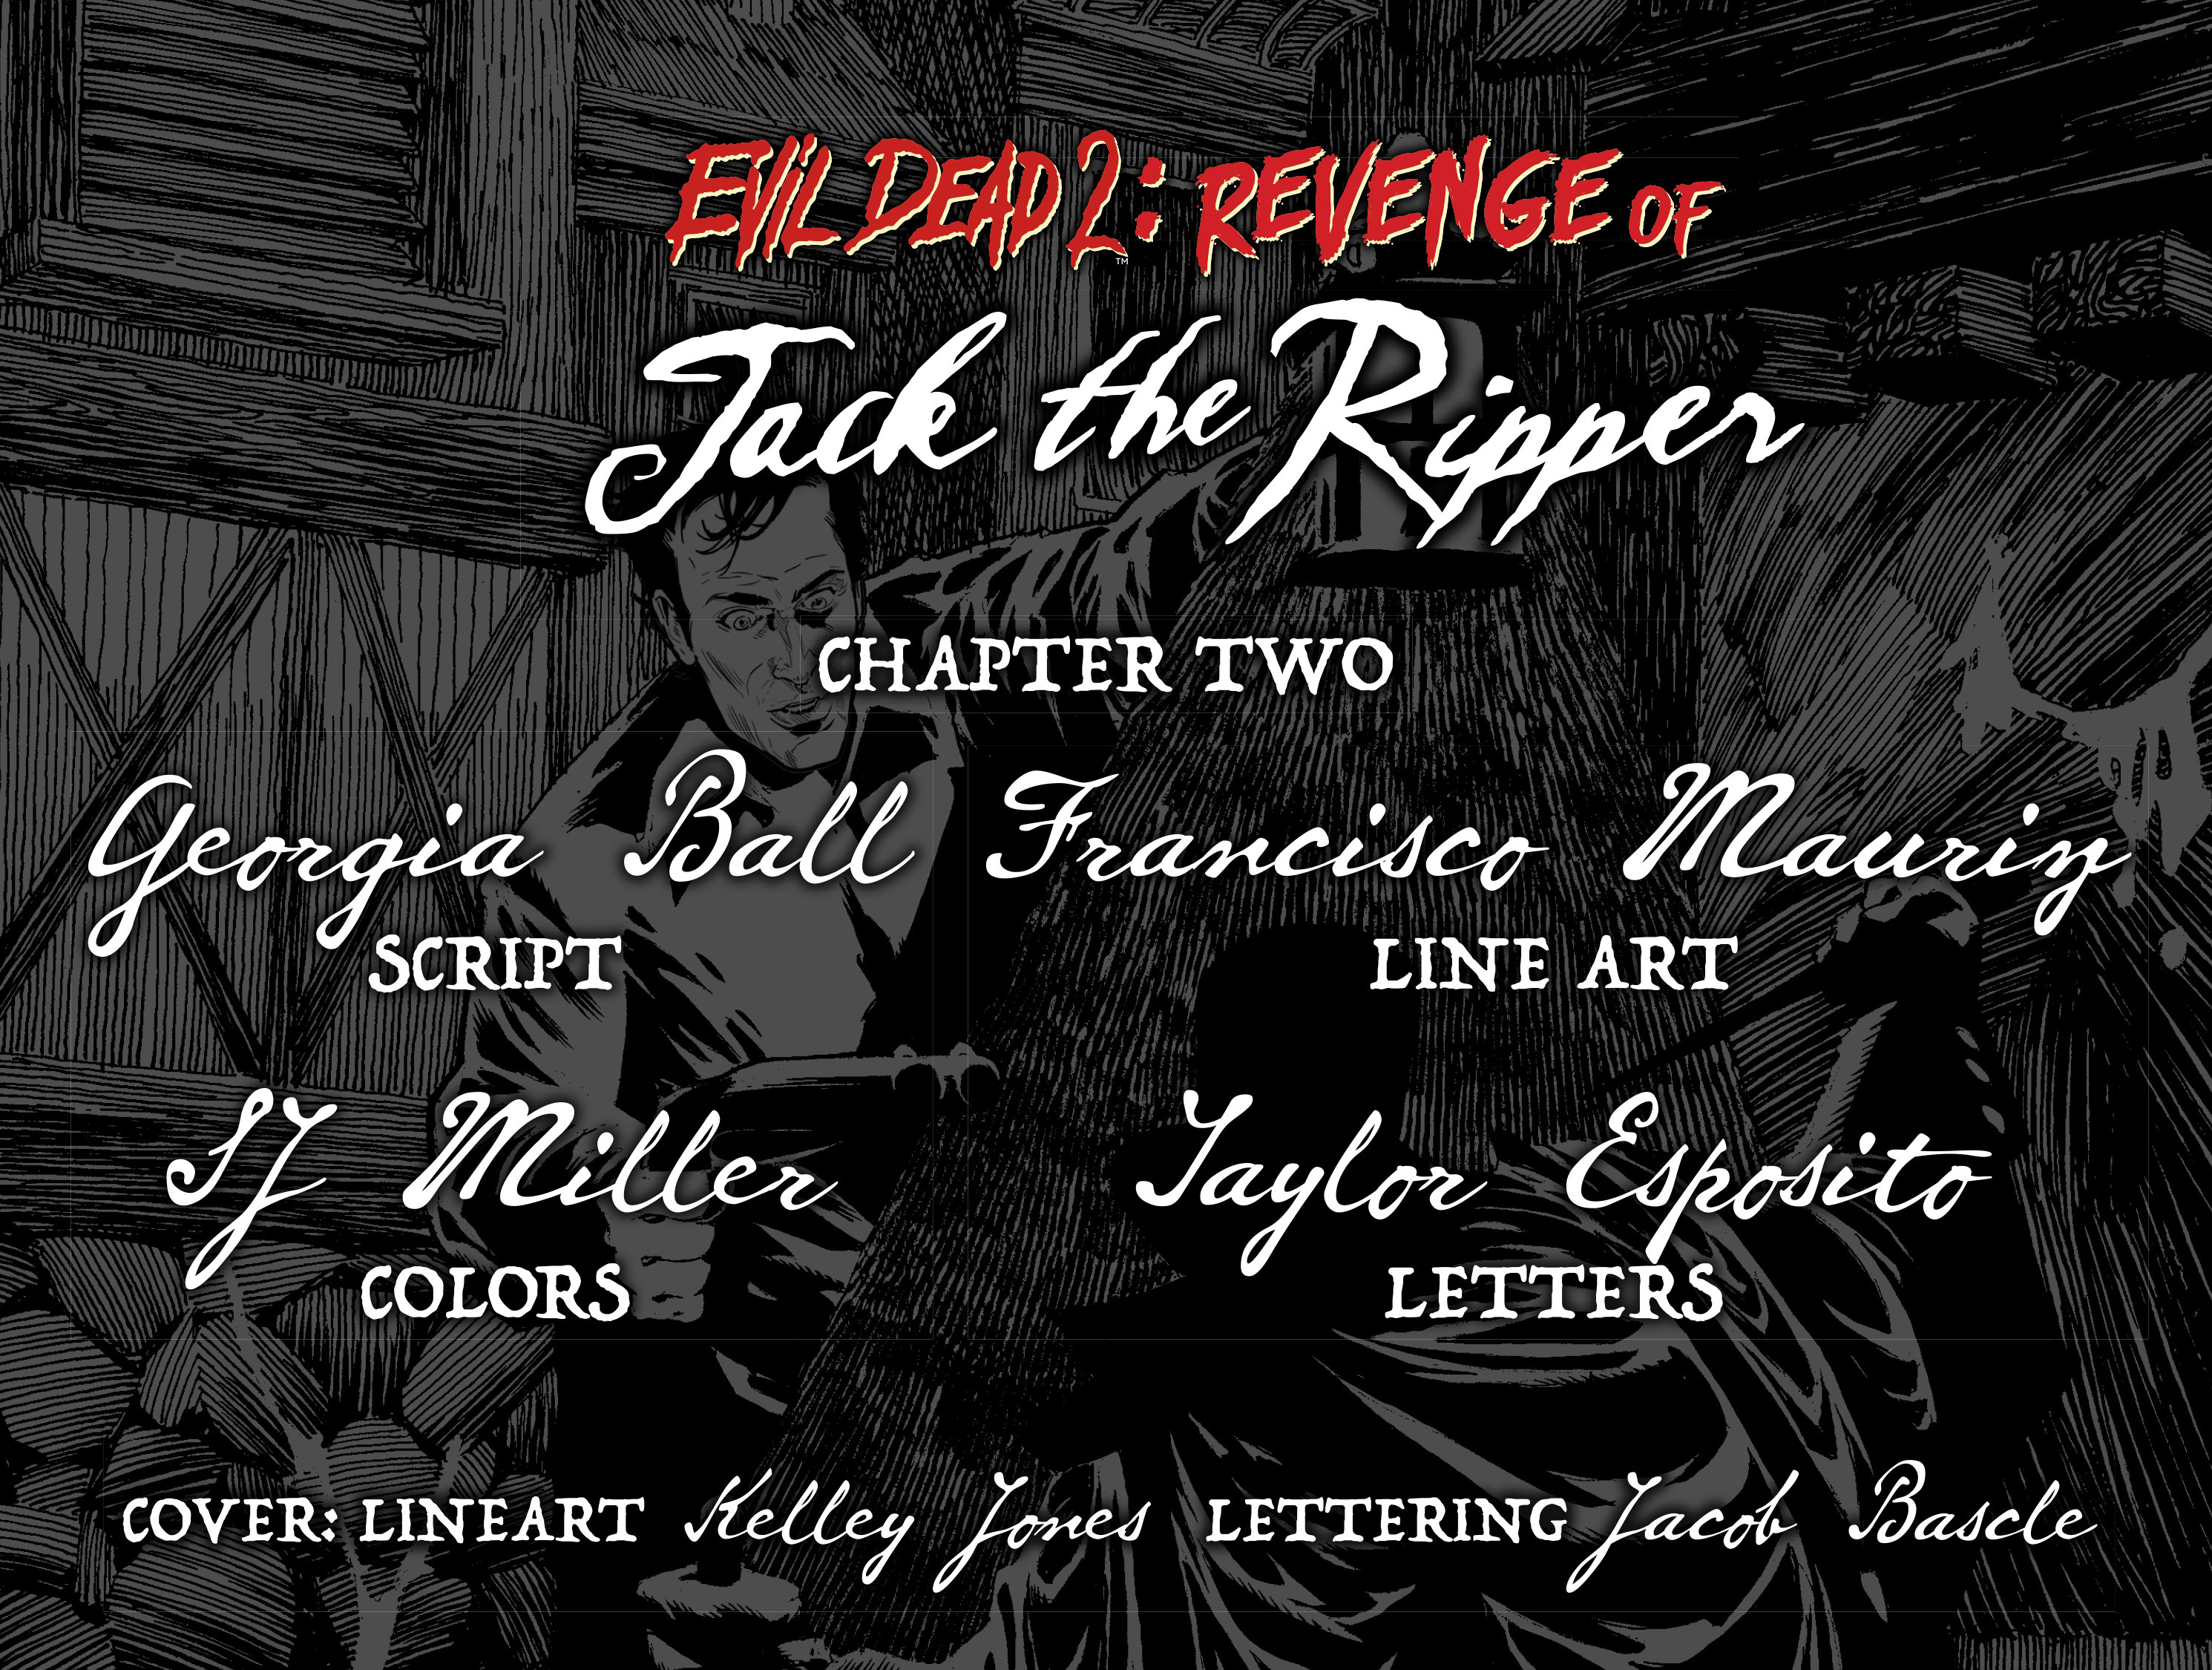 Evil Dead 2: Revenge of Jack the Ripper: Chapter 2 - Page 2